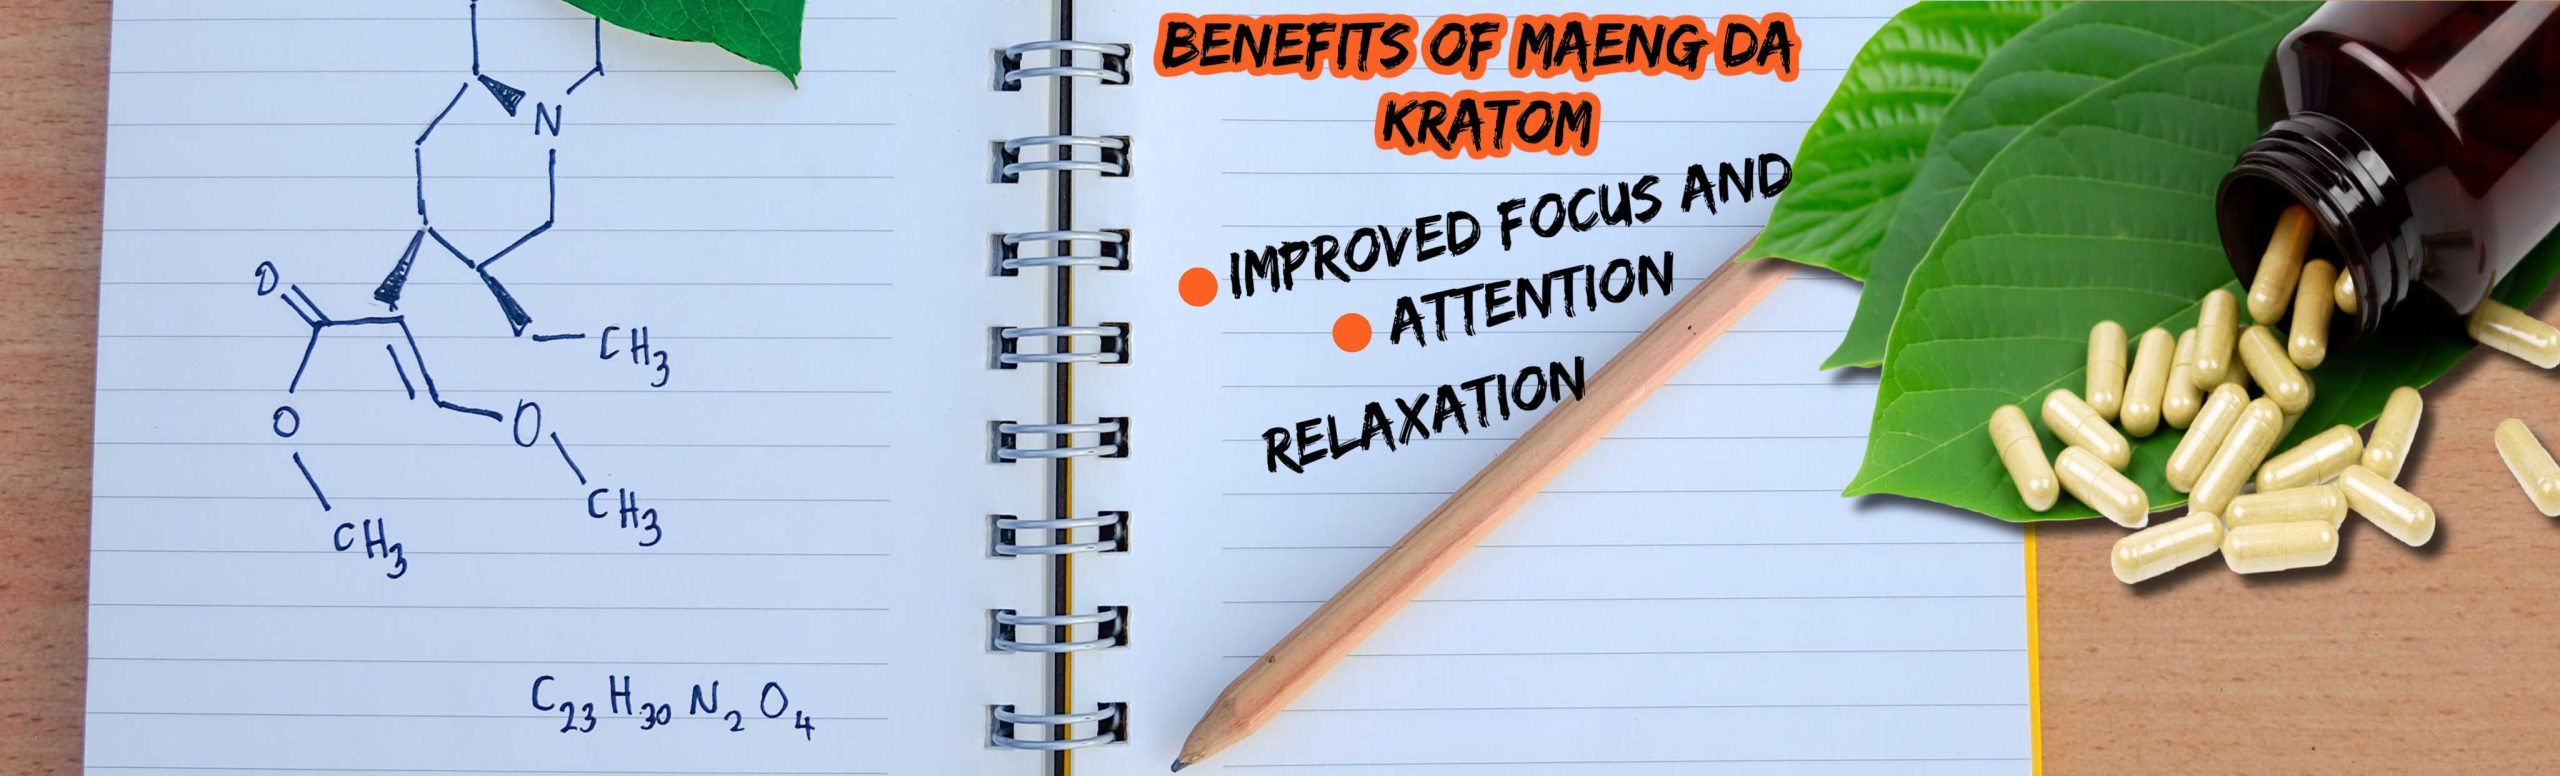 image of maeng da kratom benefits